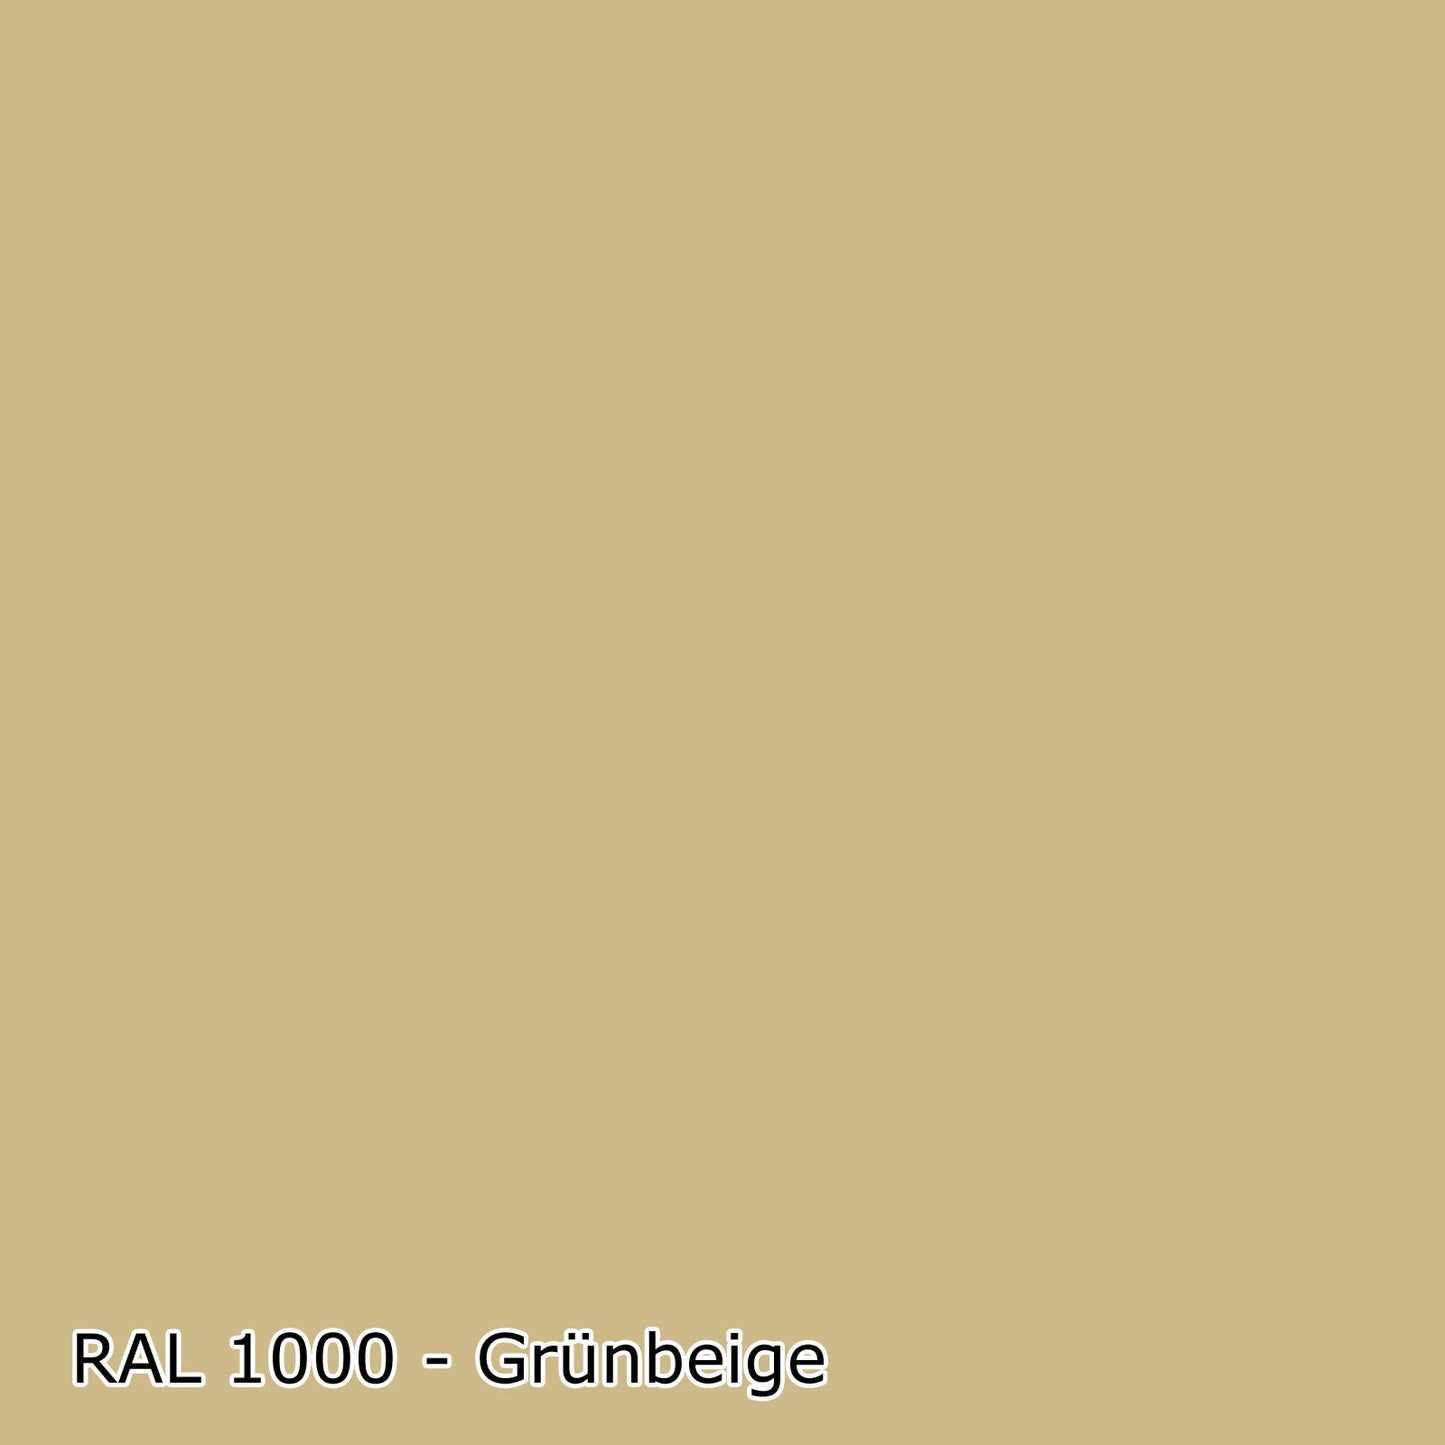 1 L Acryl Buntlack, Acryllack, RAL Farbwahl - MATT (RAL 1000 - 6007)